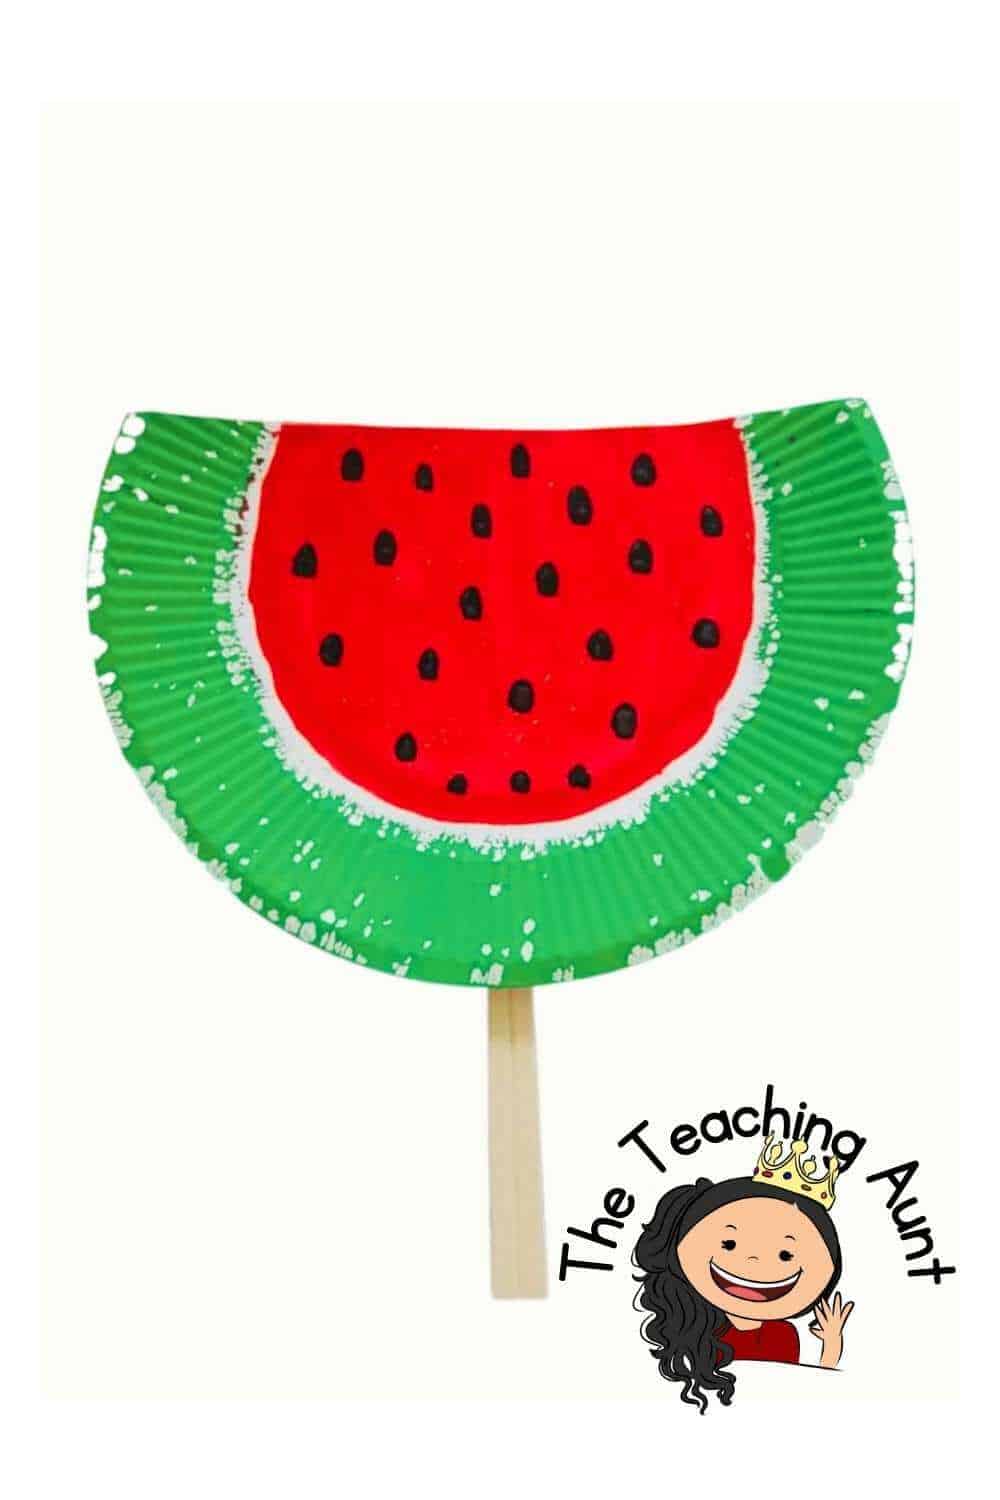 Watermelon Art and Craft Activity for Preschool